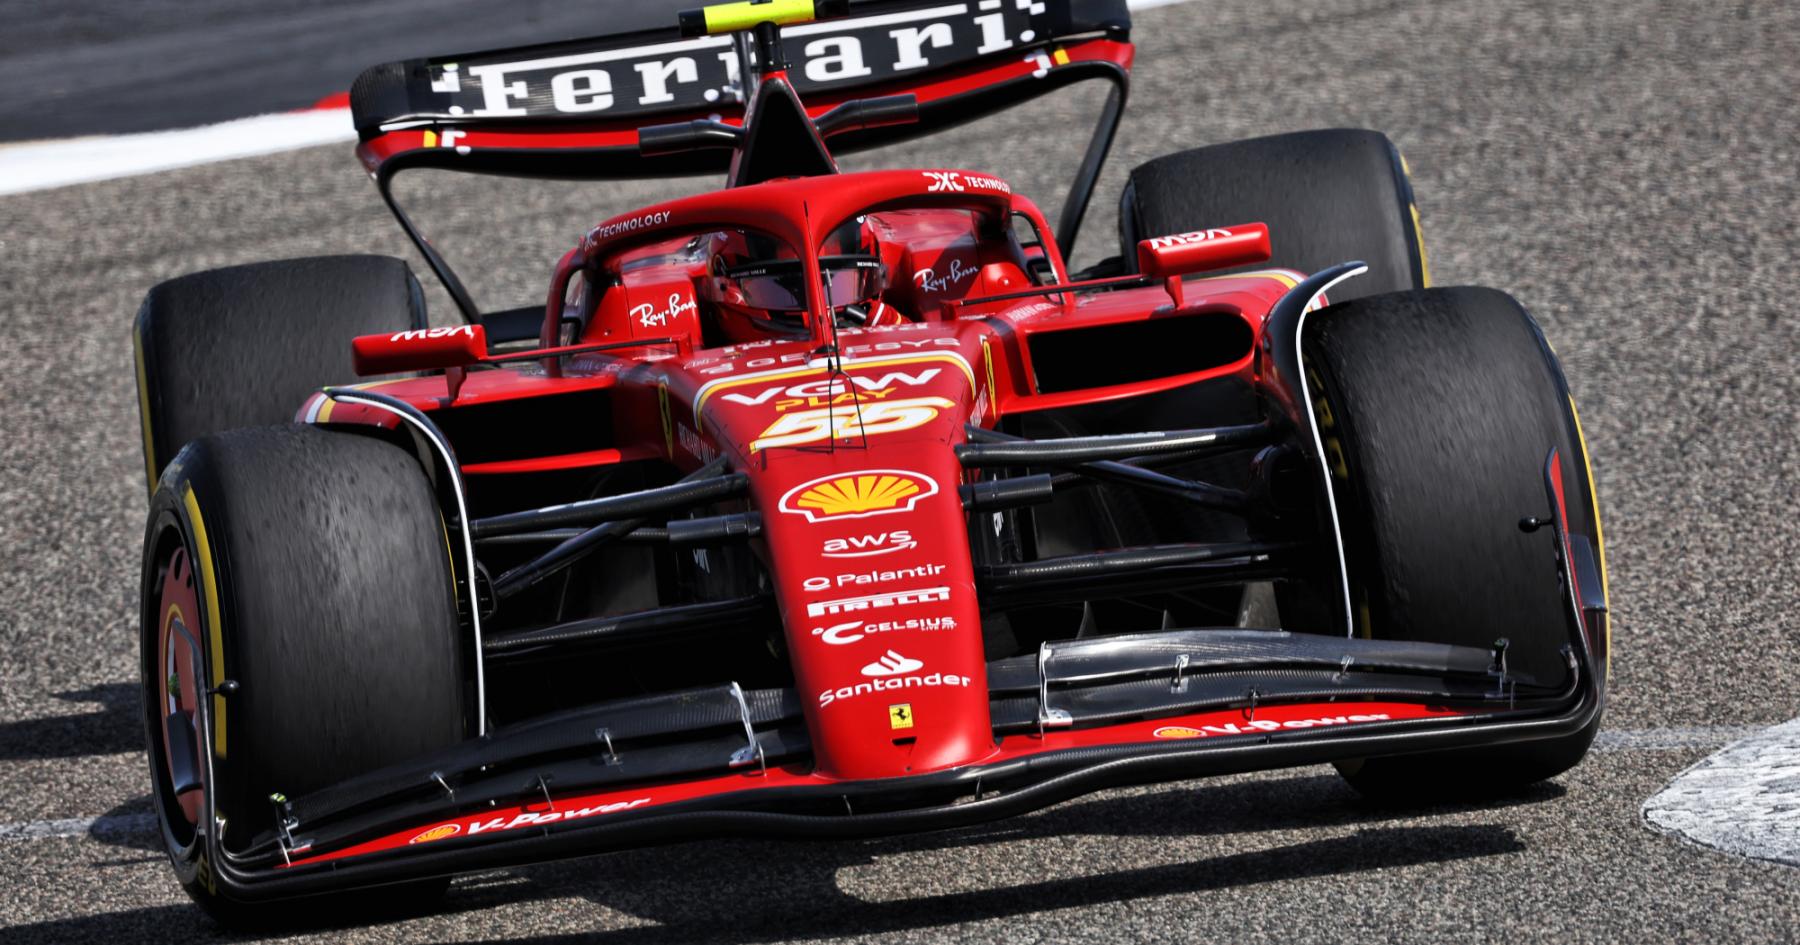 Sainz beams over Ferrari test despite red flag delay